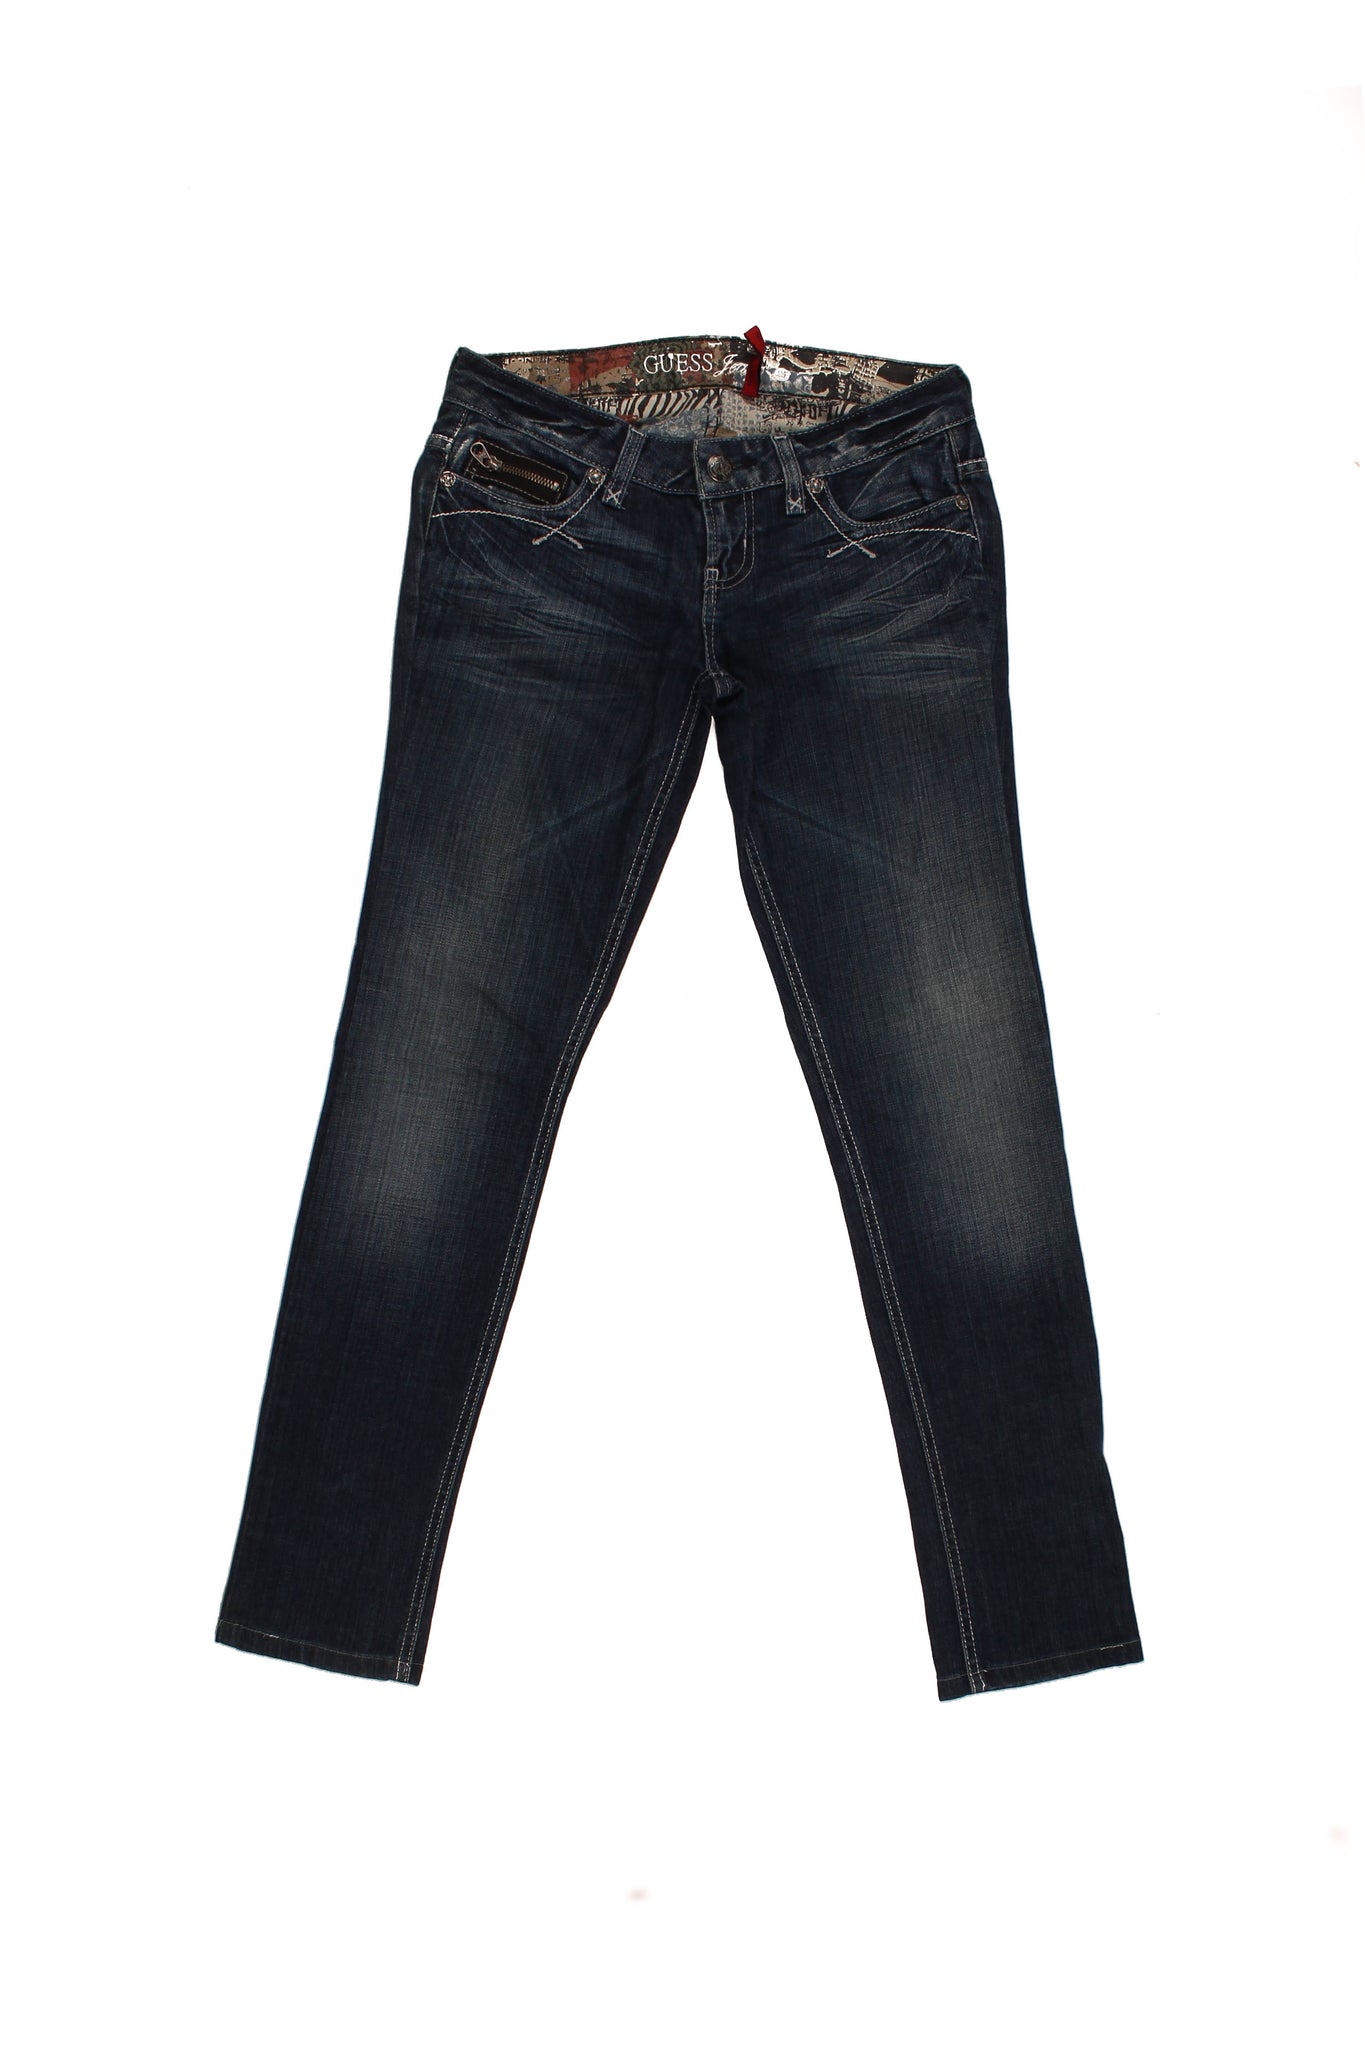 GUESS - Skinny Jean Azul Detalle Zippers - Piedras